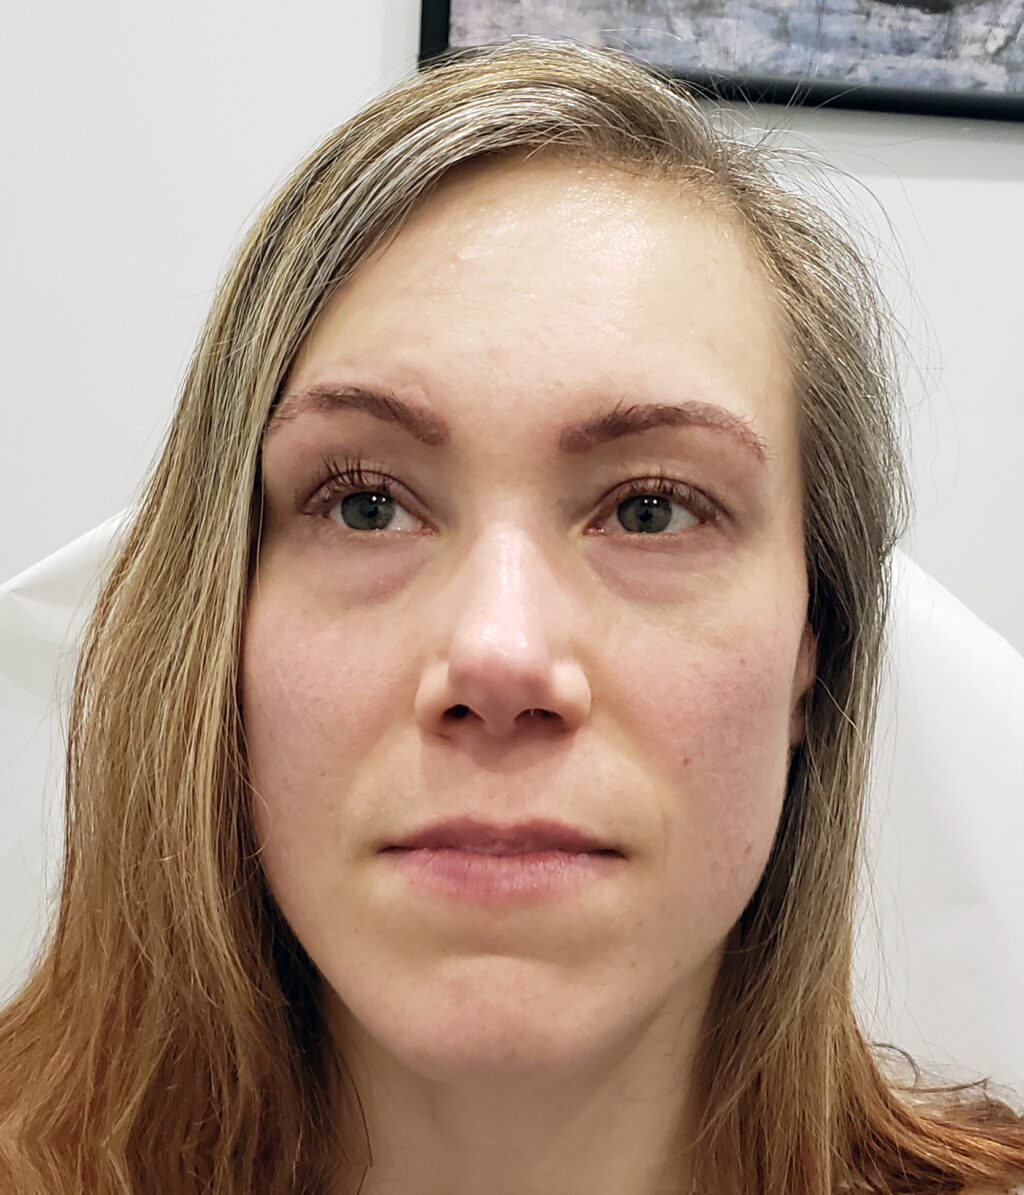 Eyebrow transplant 2 weeks post transplant